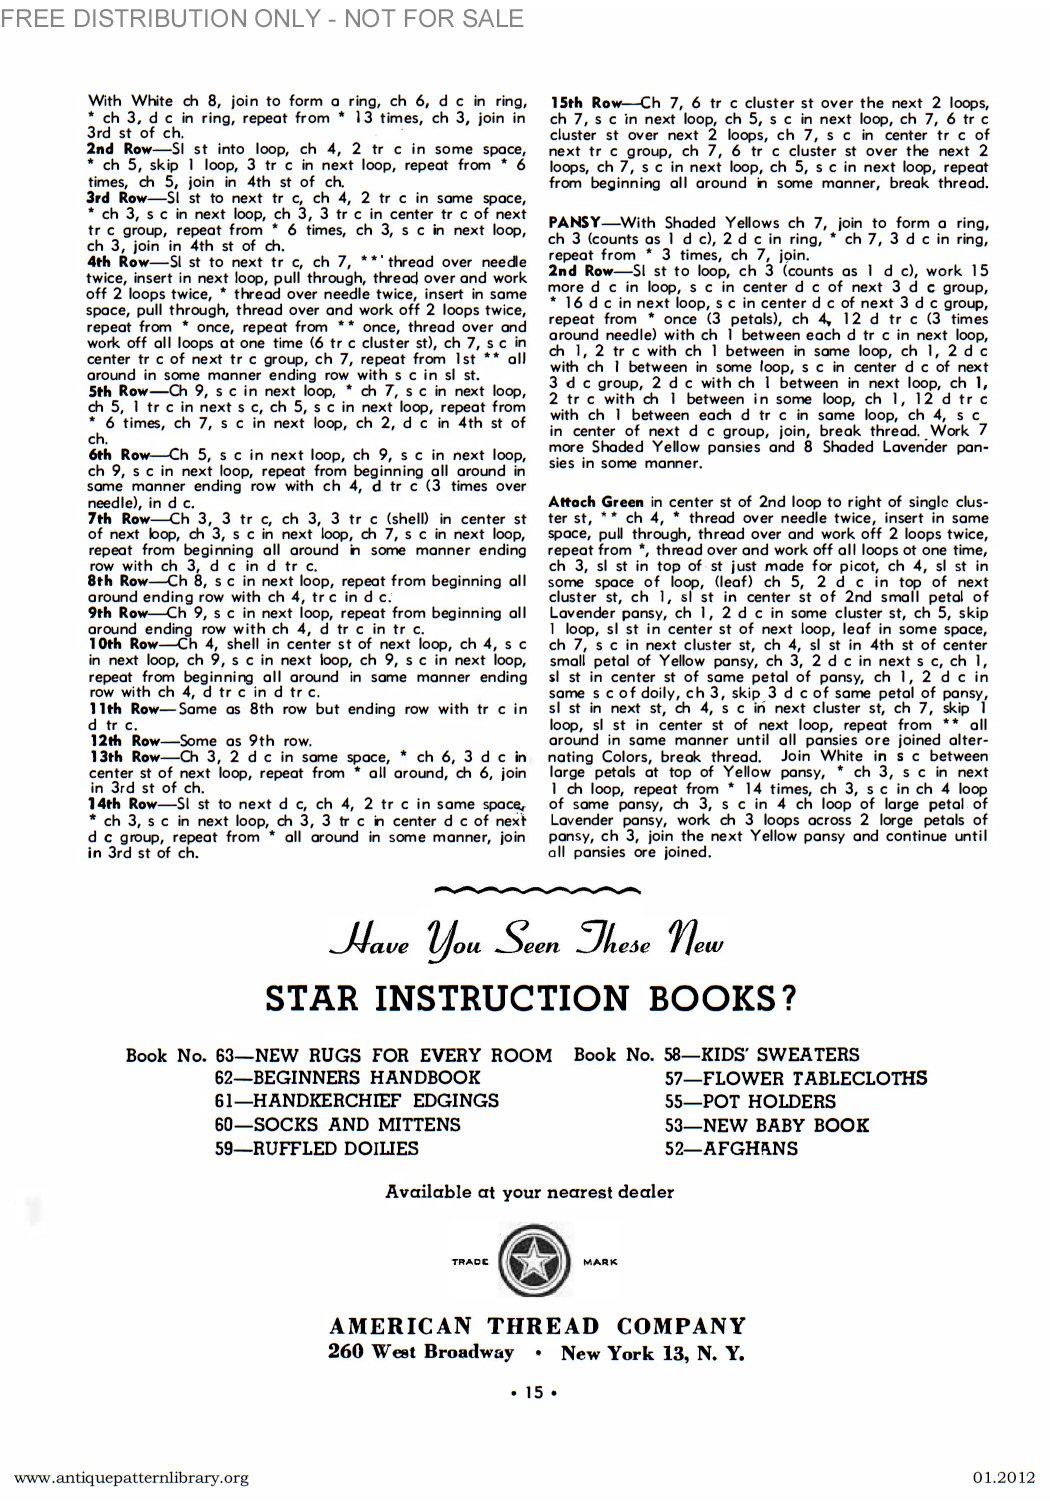 B-JA078 Star Book No. 64